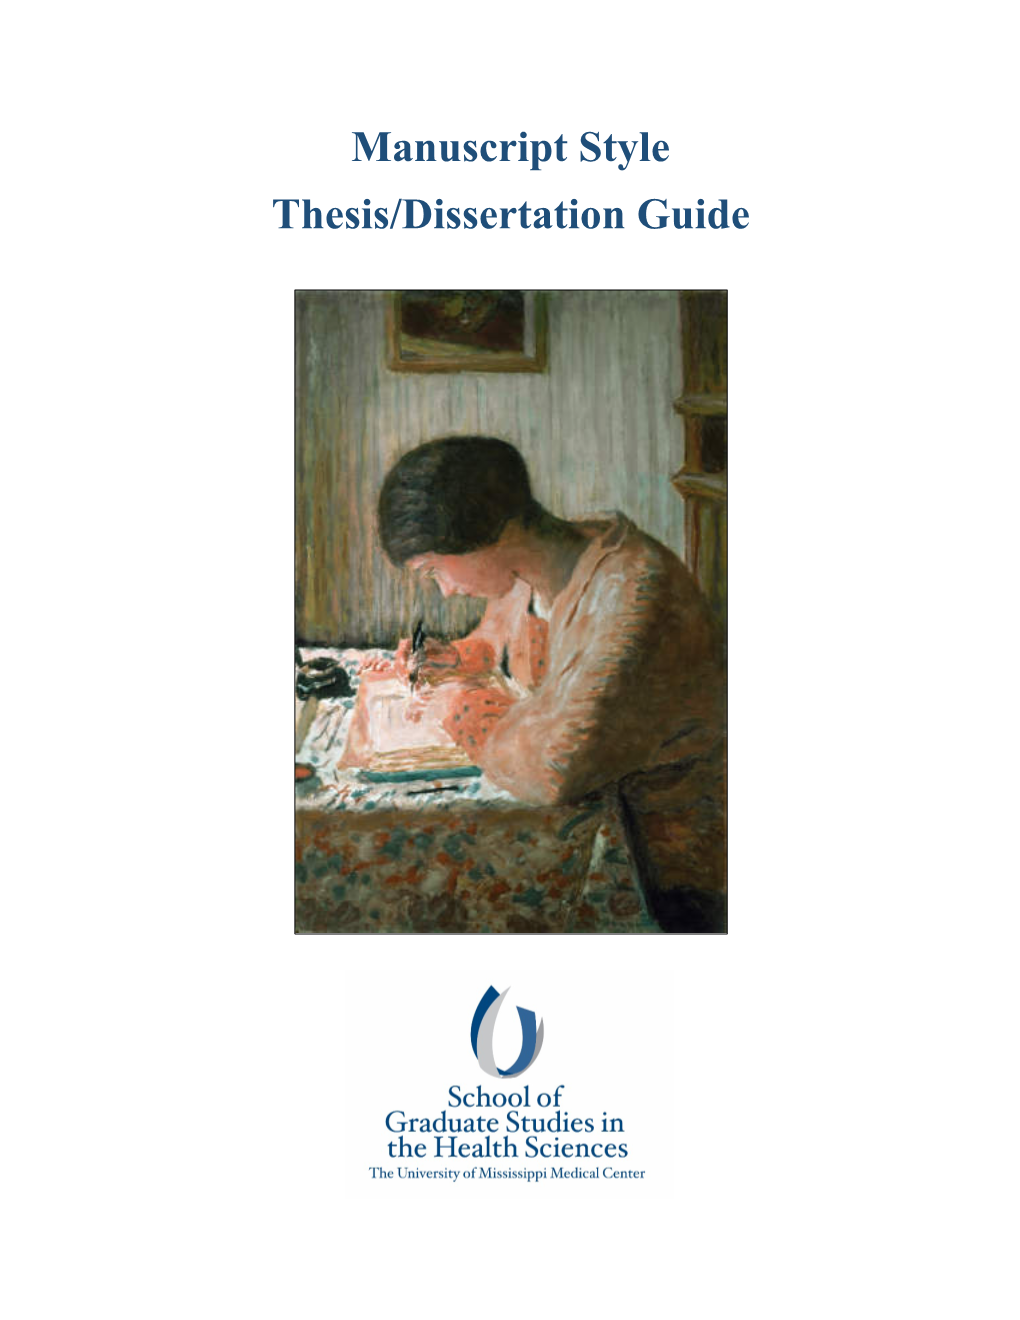 Manuscript Style Thesis/Dissertation Guide